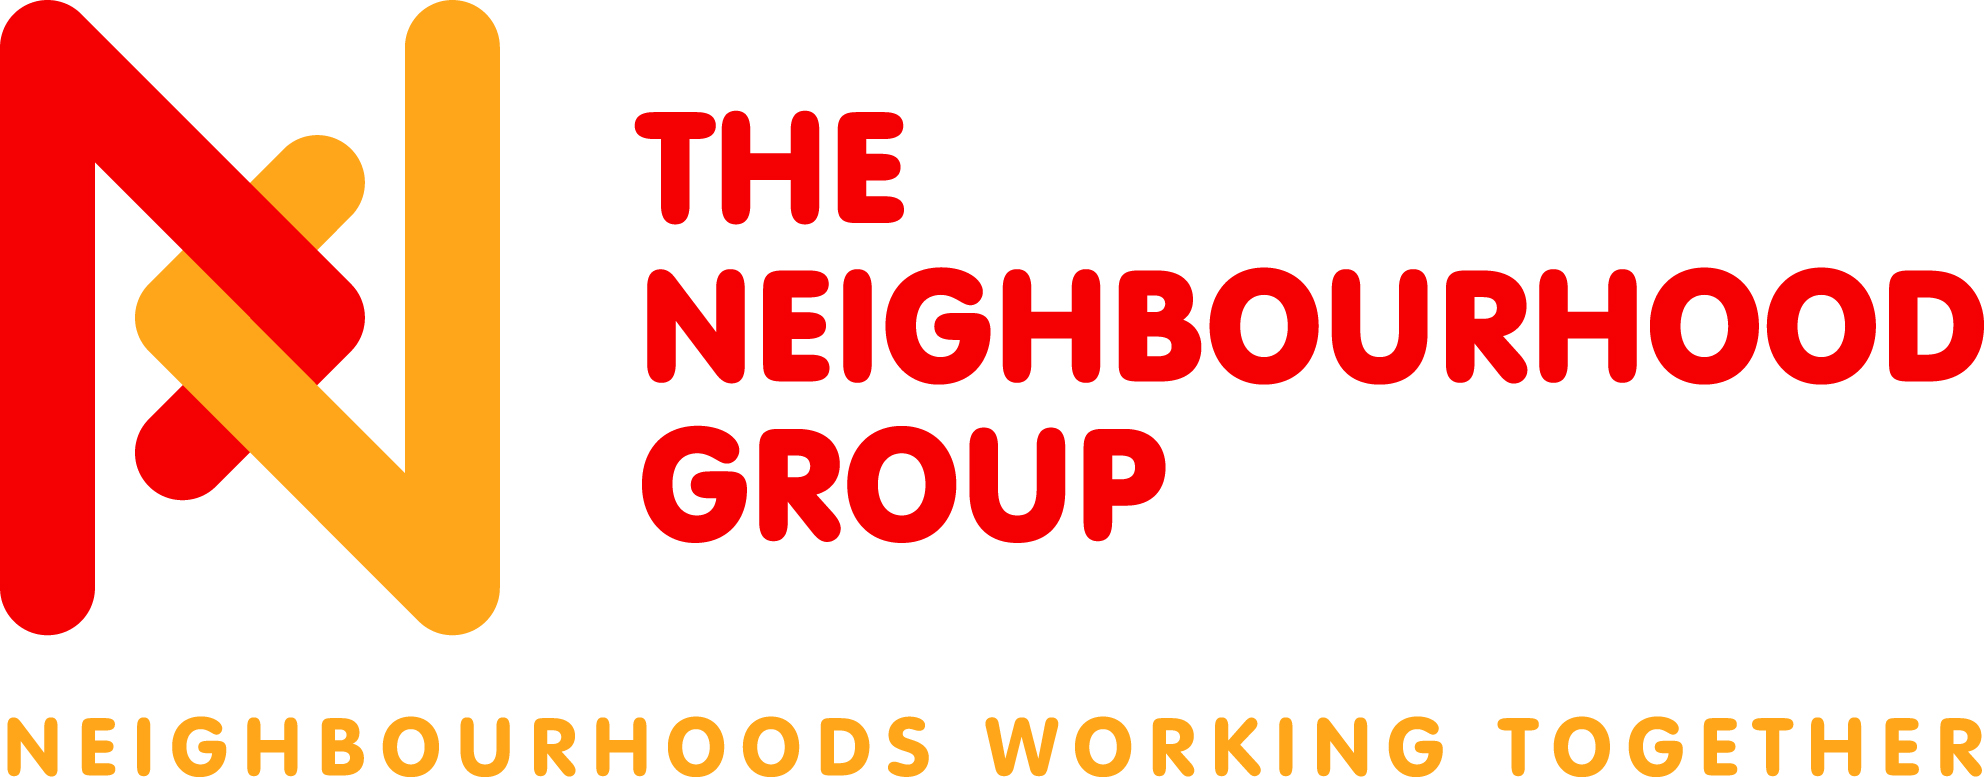 The Neighbourhood Group